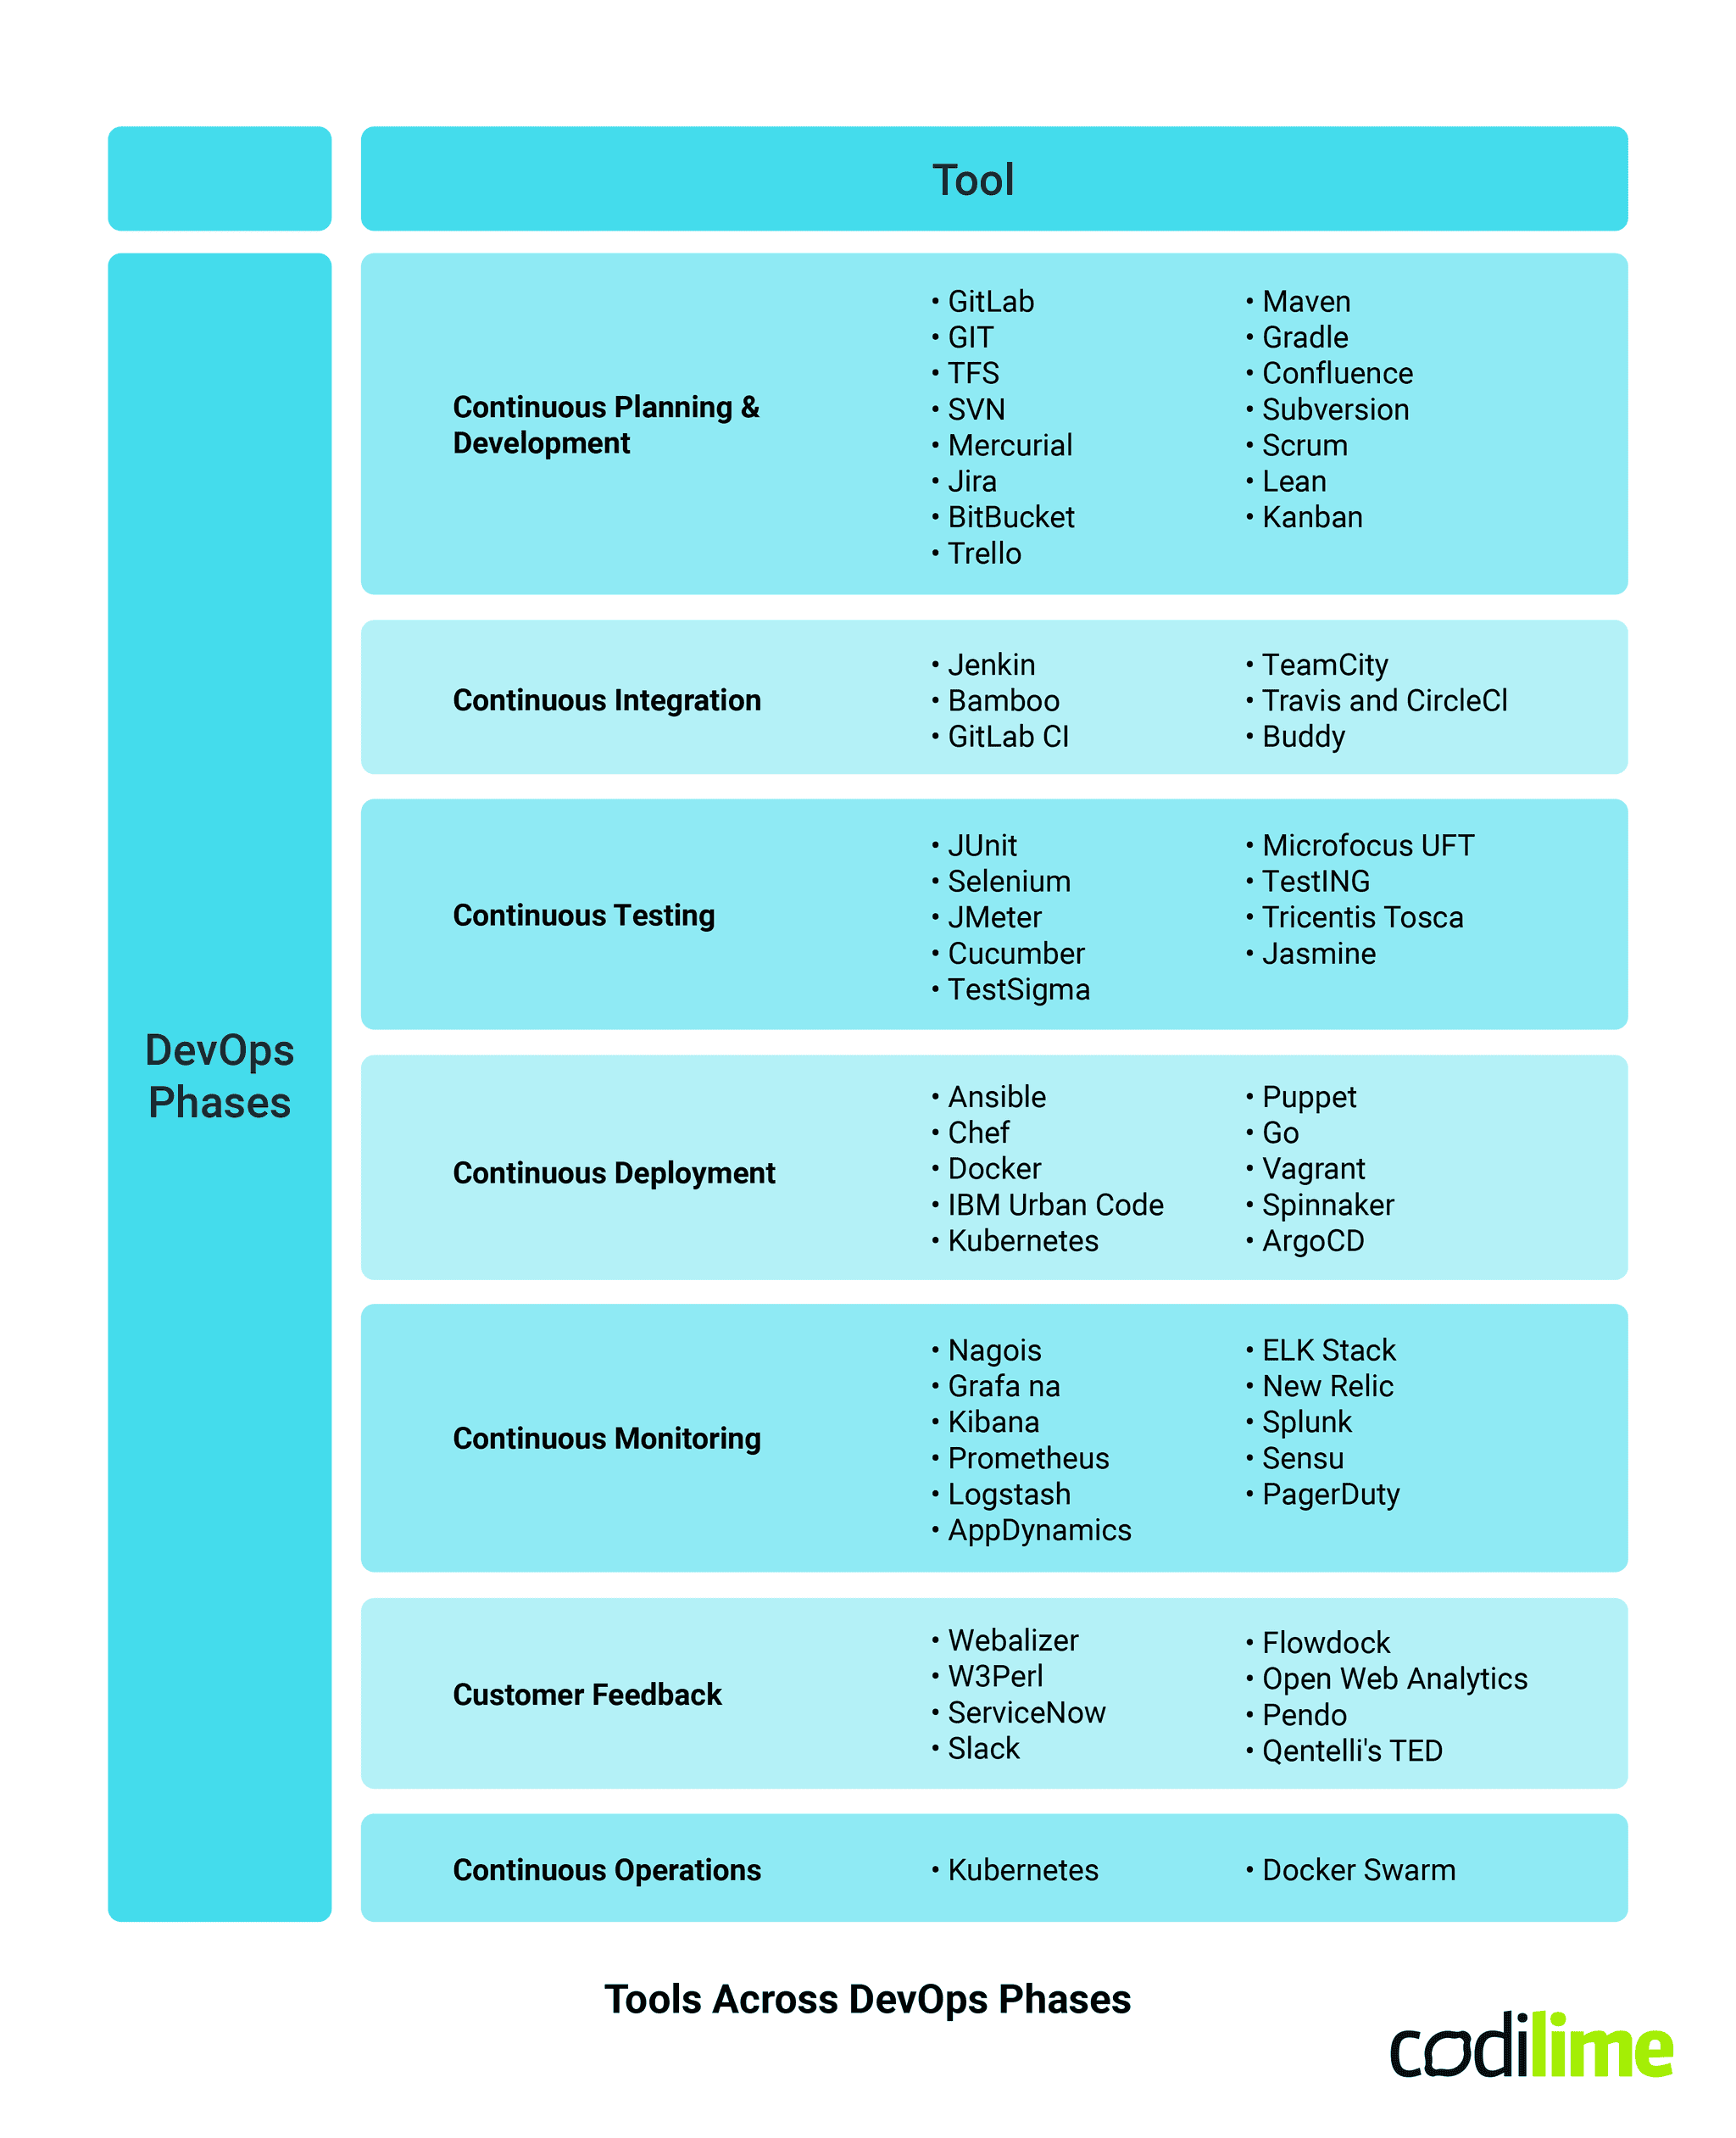 Table of DevOps tools